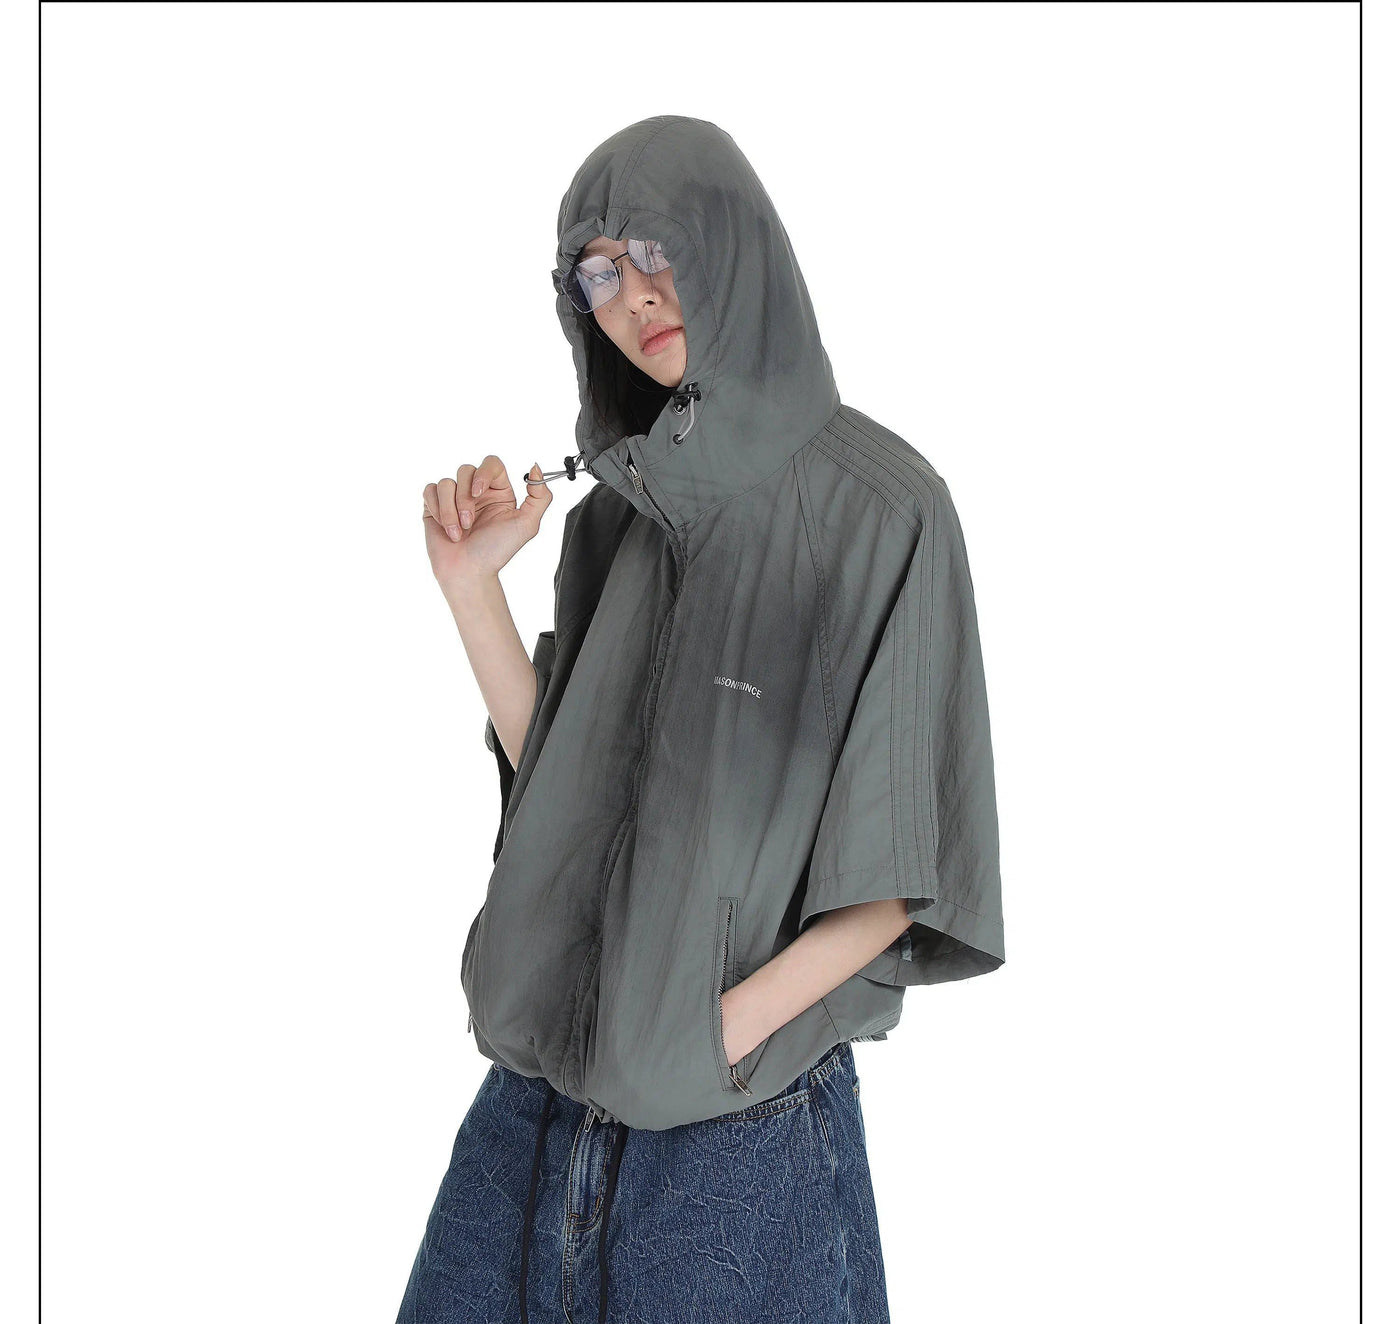 Tie-Dye Effect Windbreaker Jacket & Drawstring Pants Set Korean Street Fashion Clothing Set By Mason Prince Shop Online at OH Vault